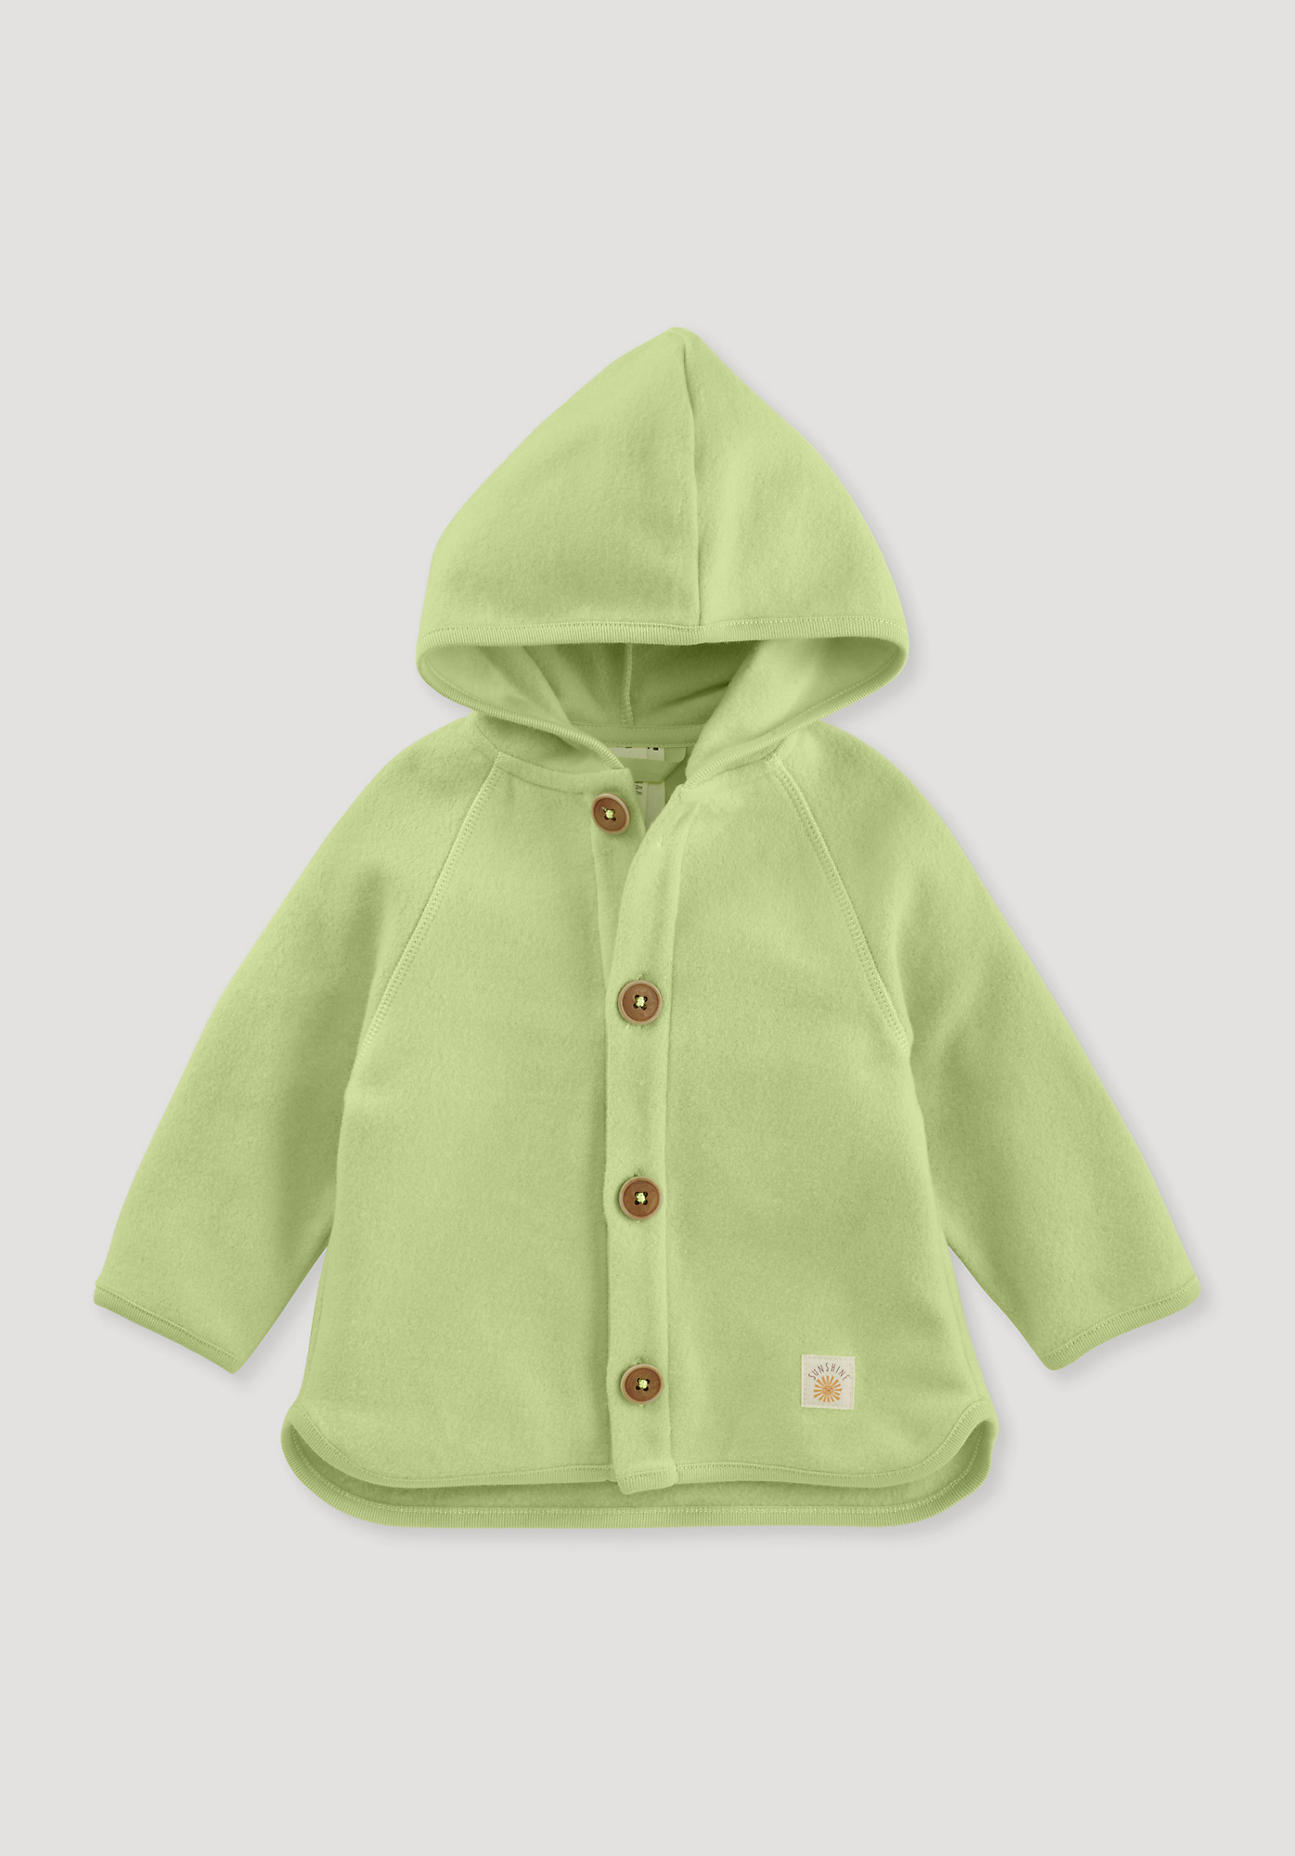 hessnatur Baby Softfleece Jacke Regular aus Bio-Baumwolle - grün - Größe 62/68